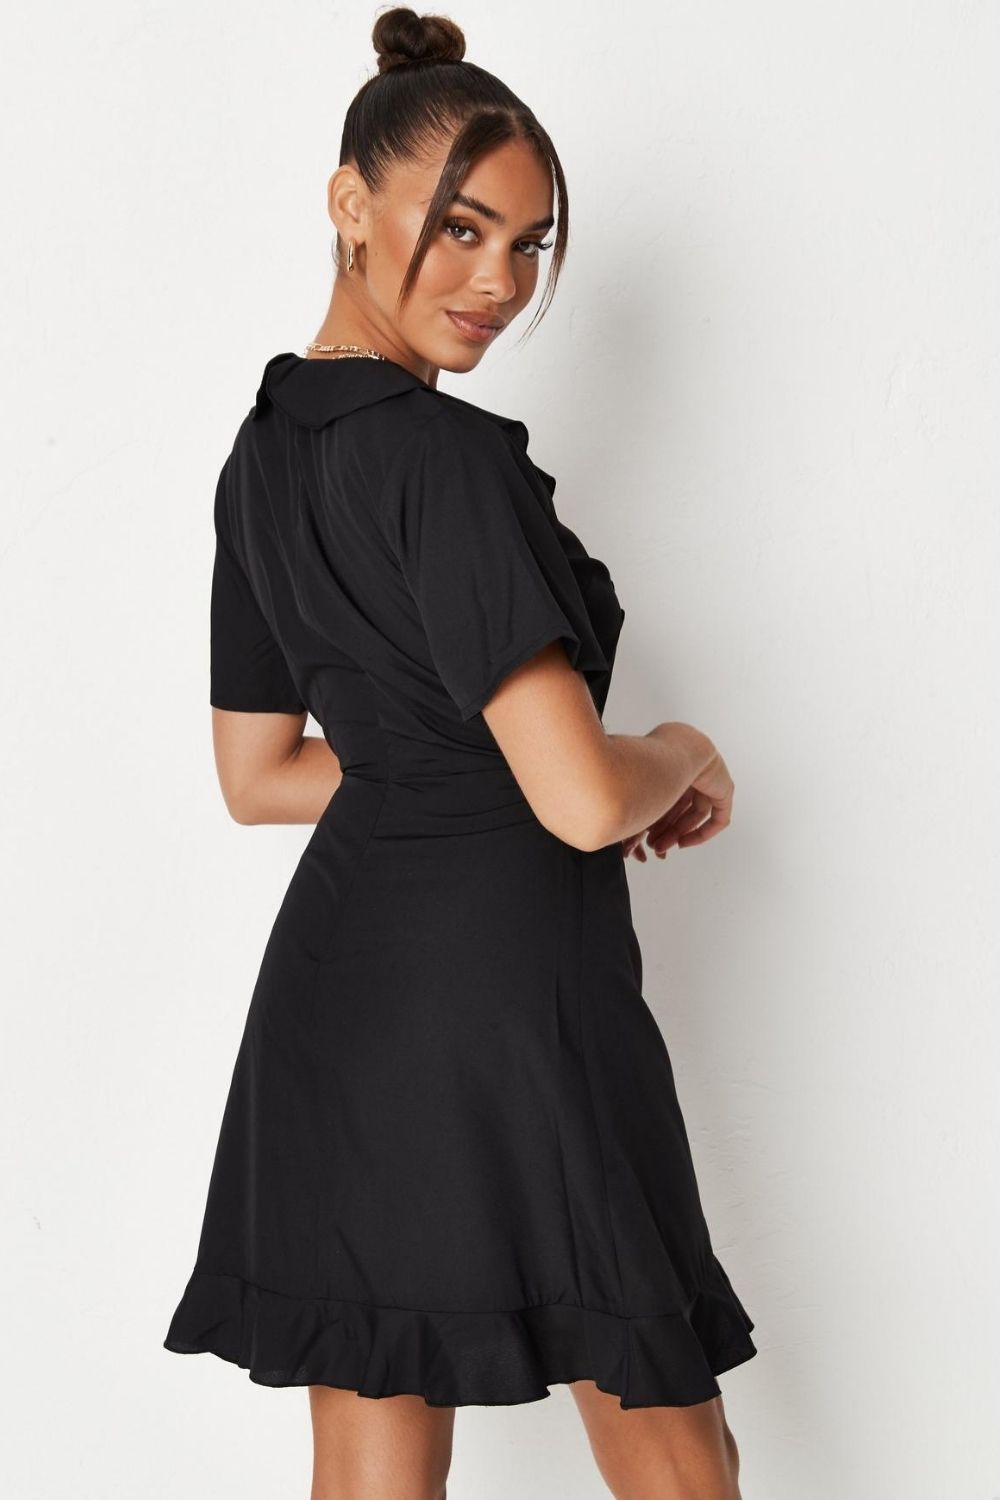 Short Black Lace Prom Dresses, Short Black Homecoming/Graduation Dress –  morievent